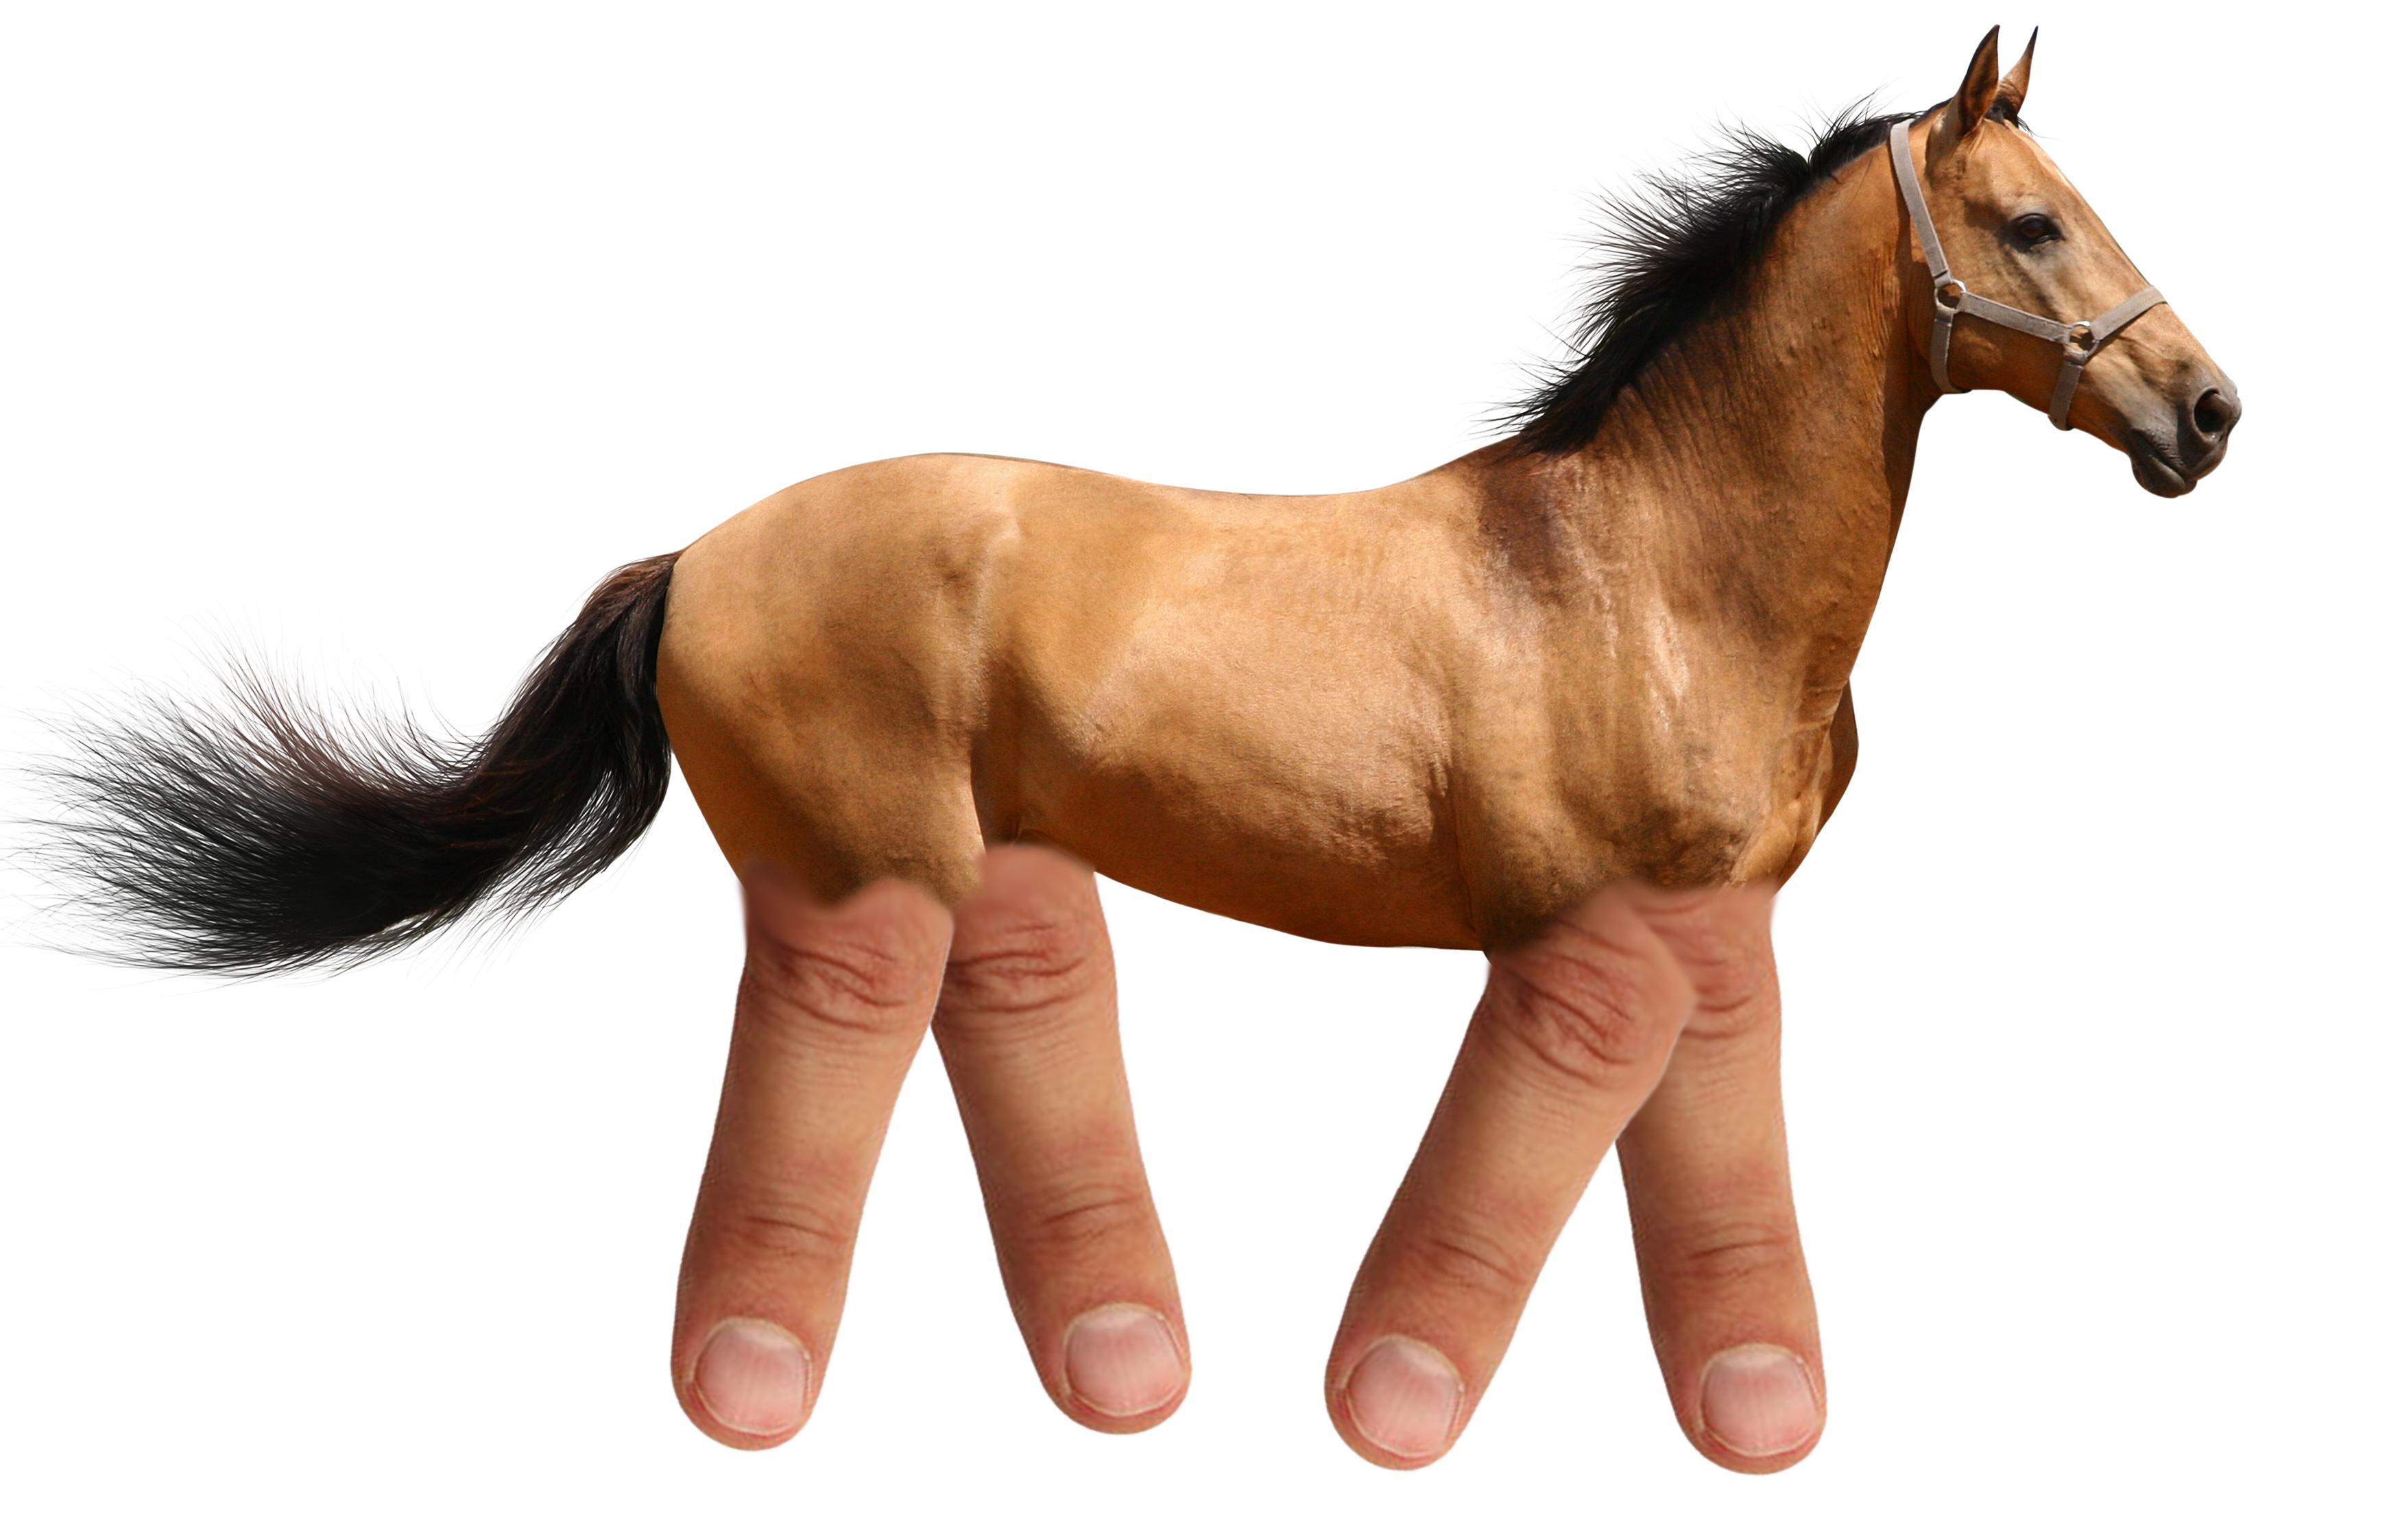 Horse's legs are fingers : MBMBAM